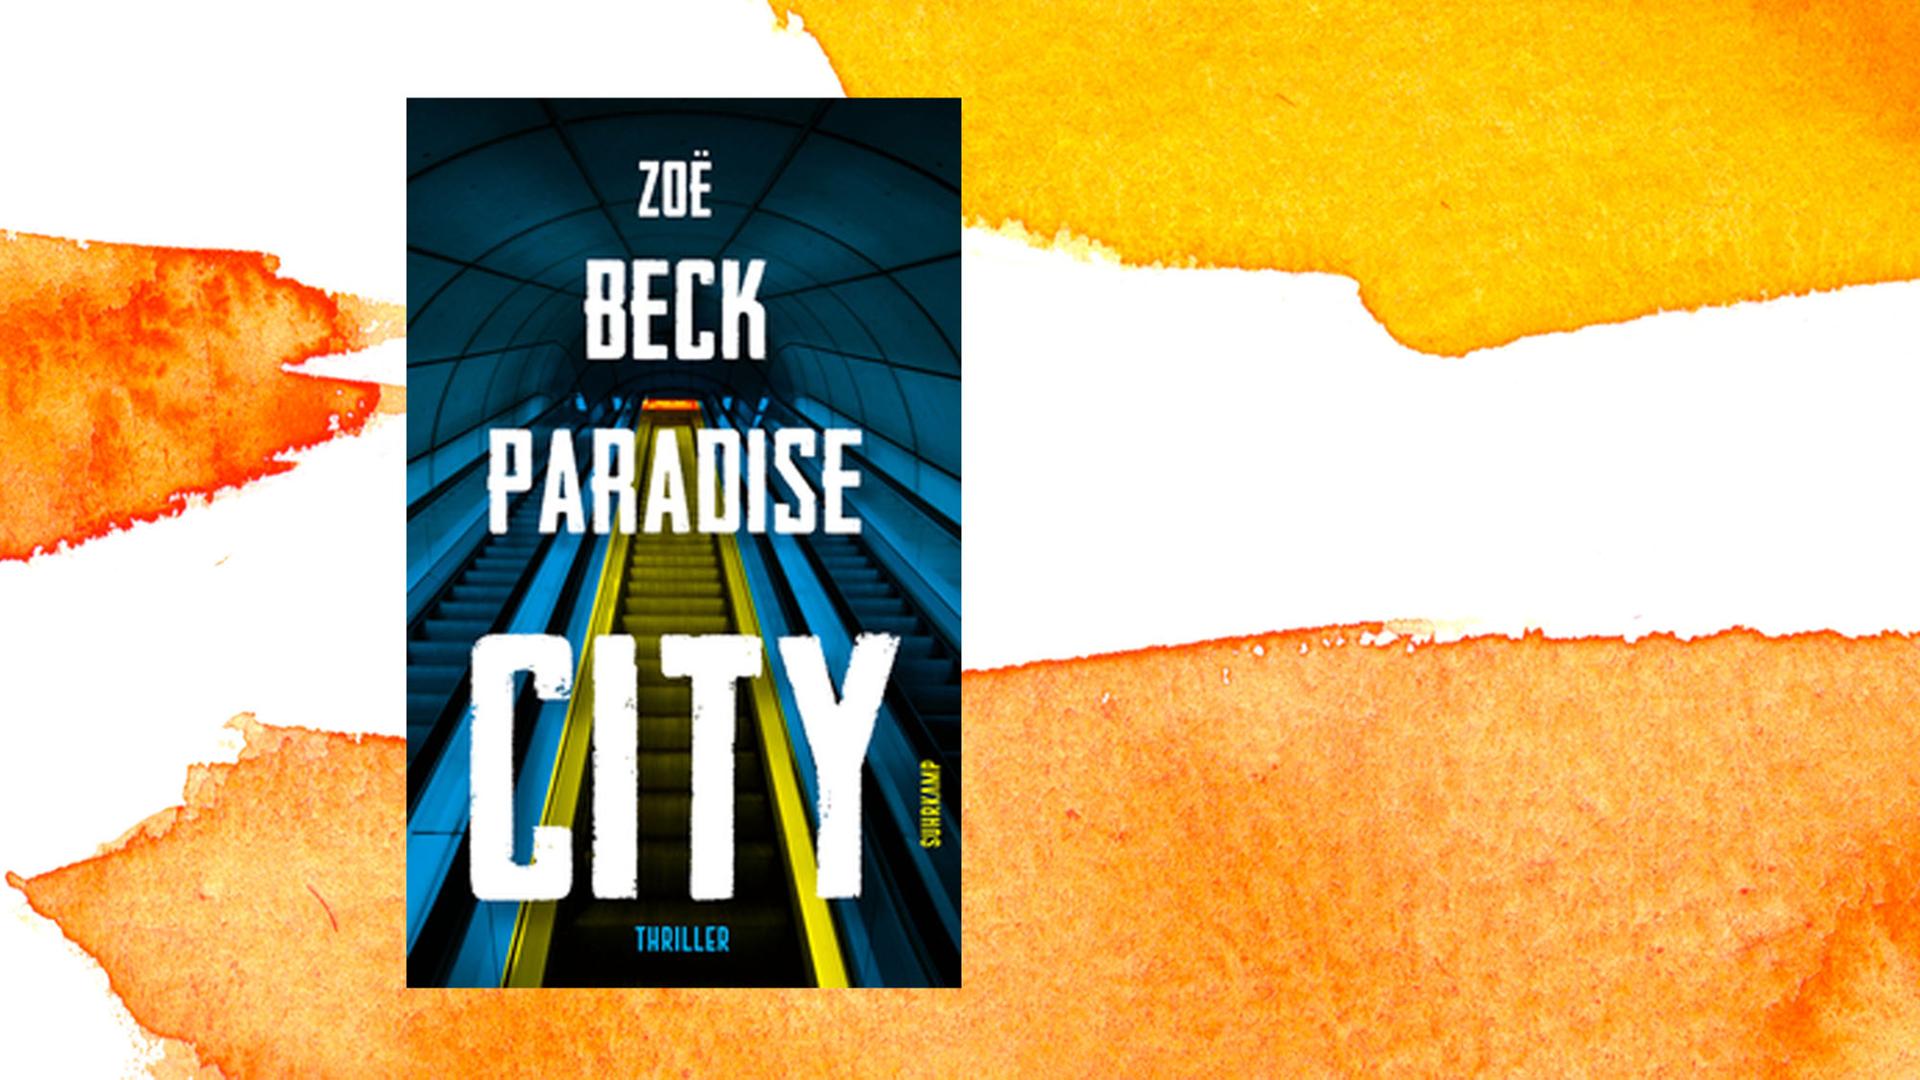 Buchcover zu Zoë Beck "Paradise City"